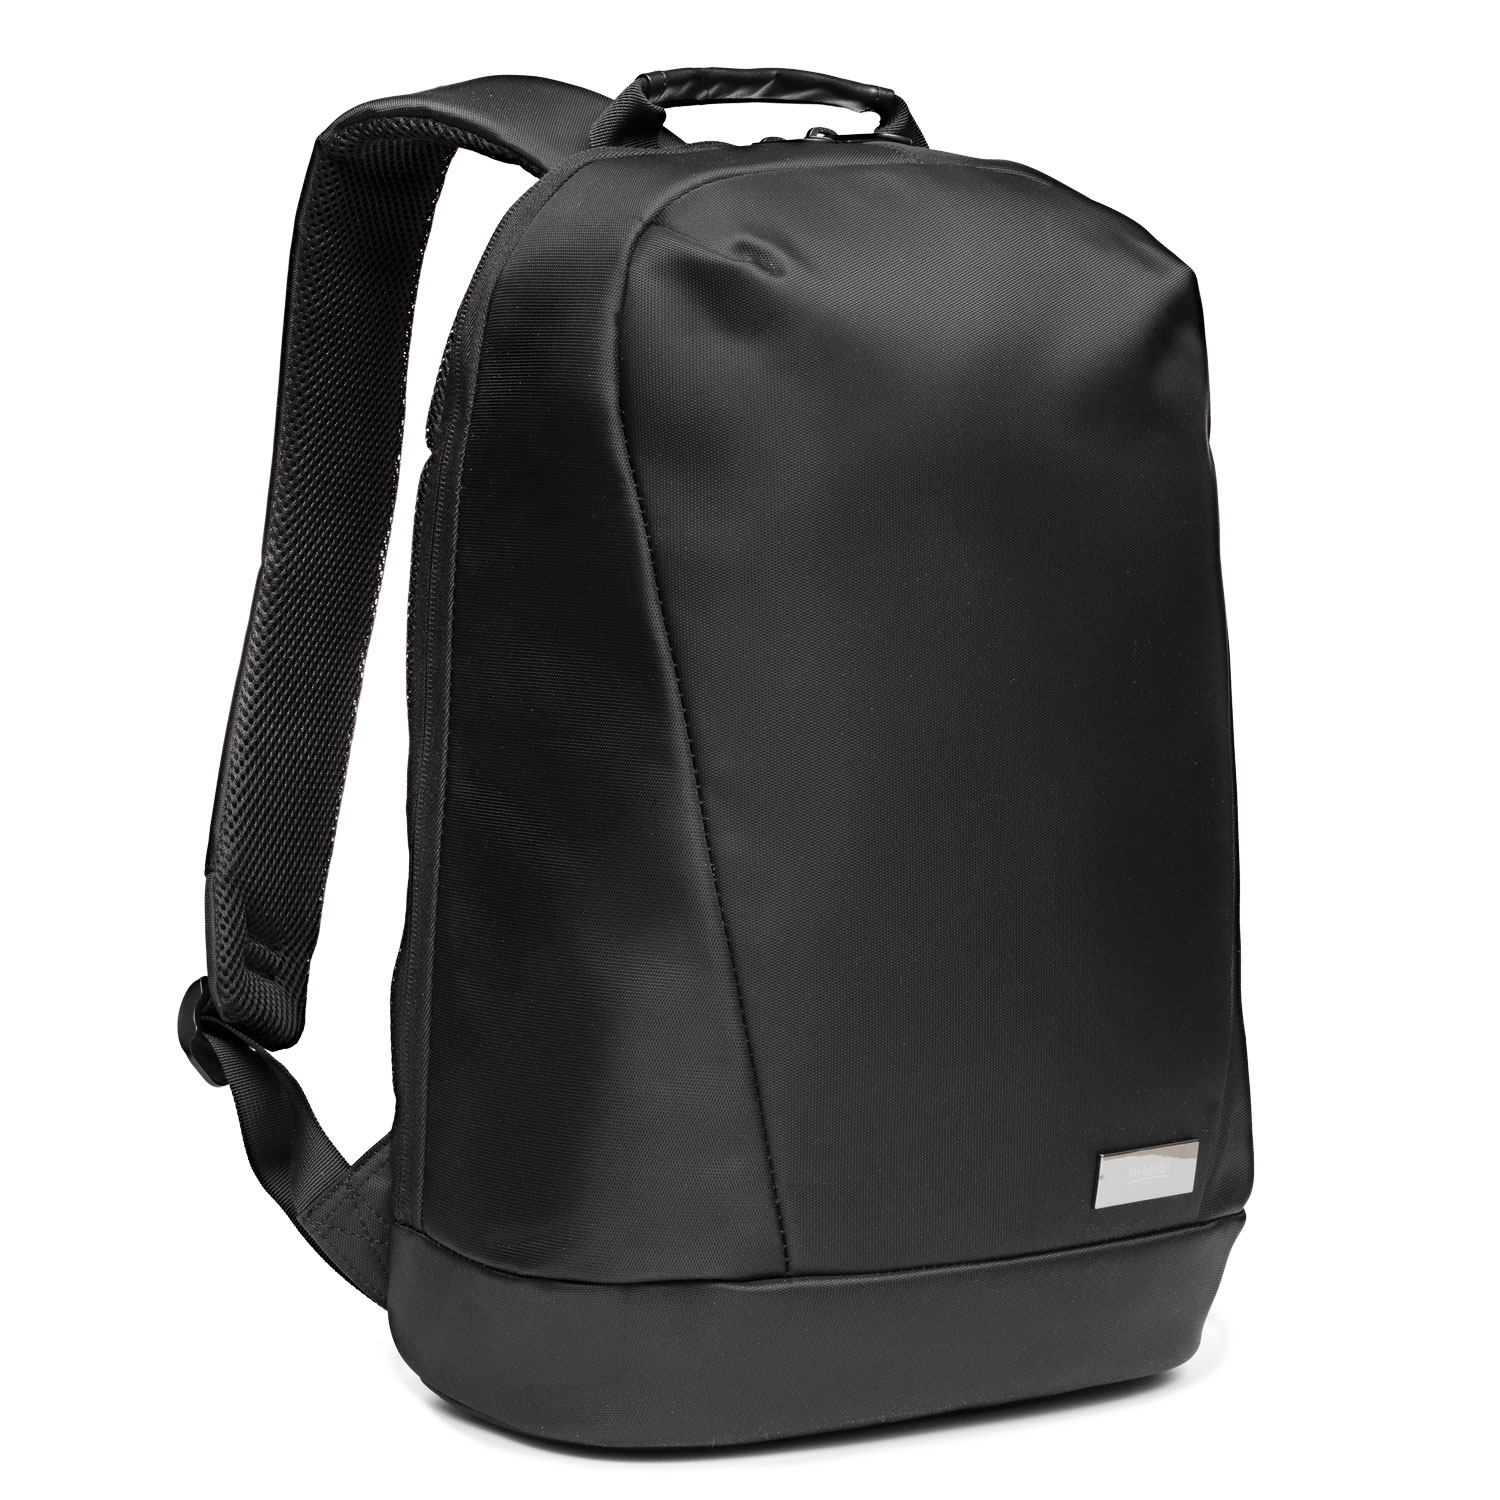 Артикул: A59272.010 — Бизнес рюкзак Alter с USB разъемом, черный